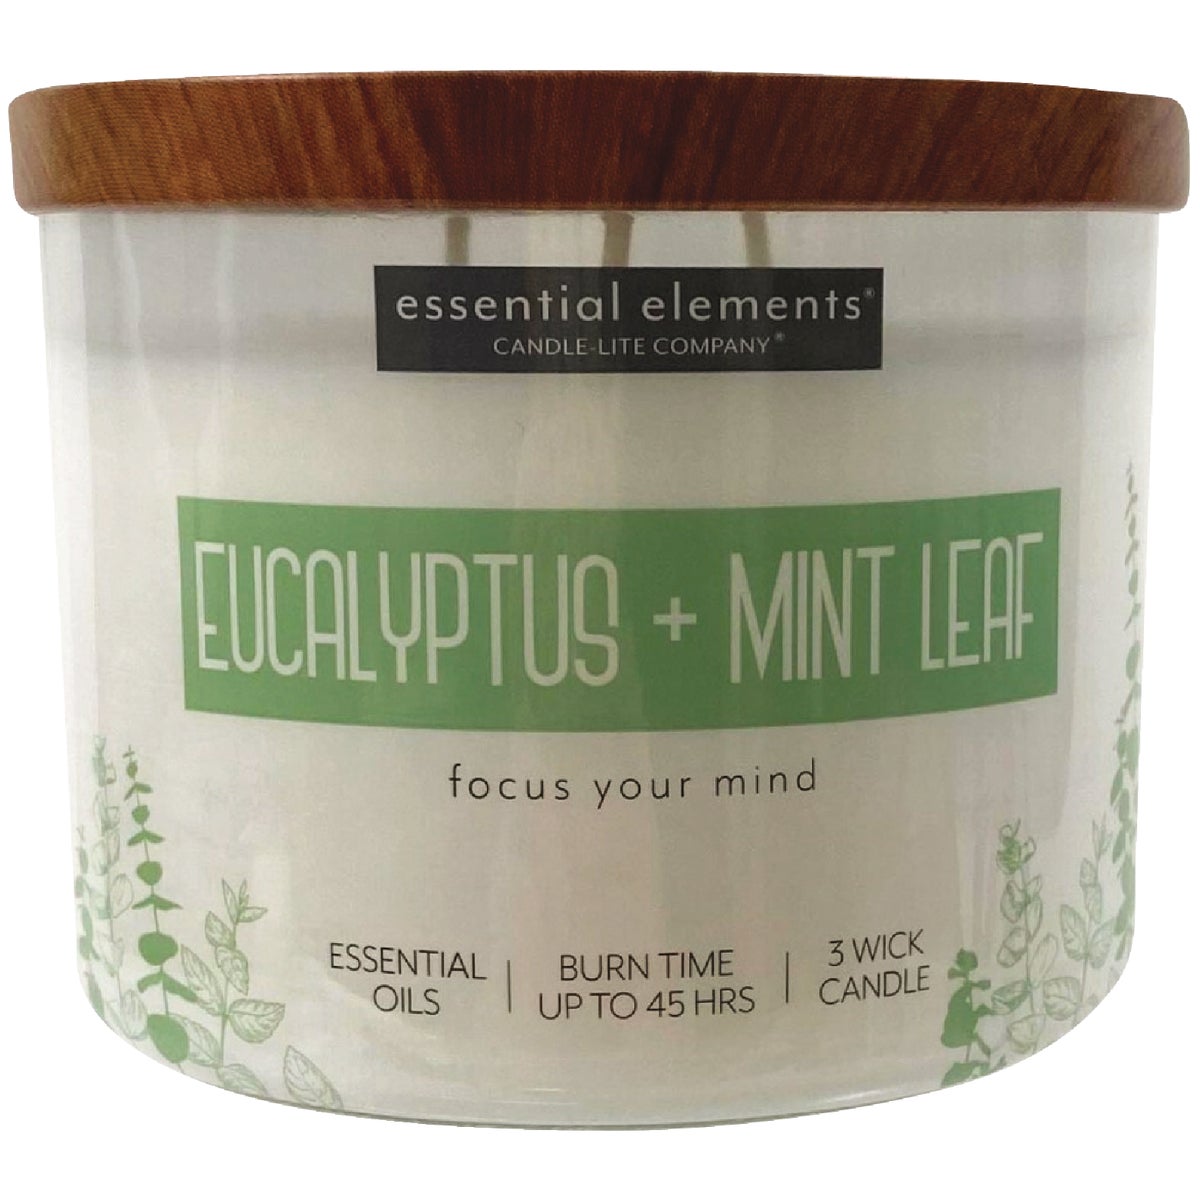 Candle Lite Essential Elements 14.75 Oz. Eucalyptus & Mint Leaf Jar Candle with Lid